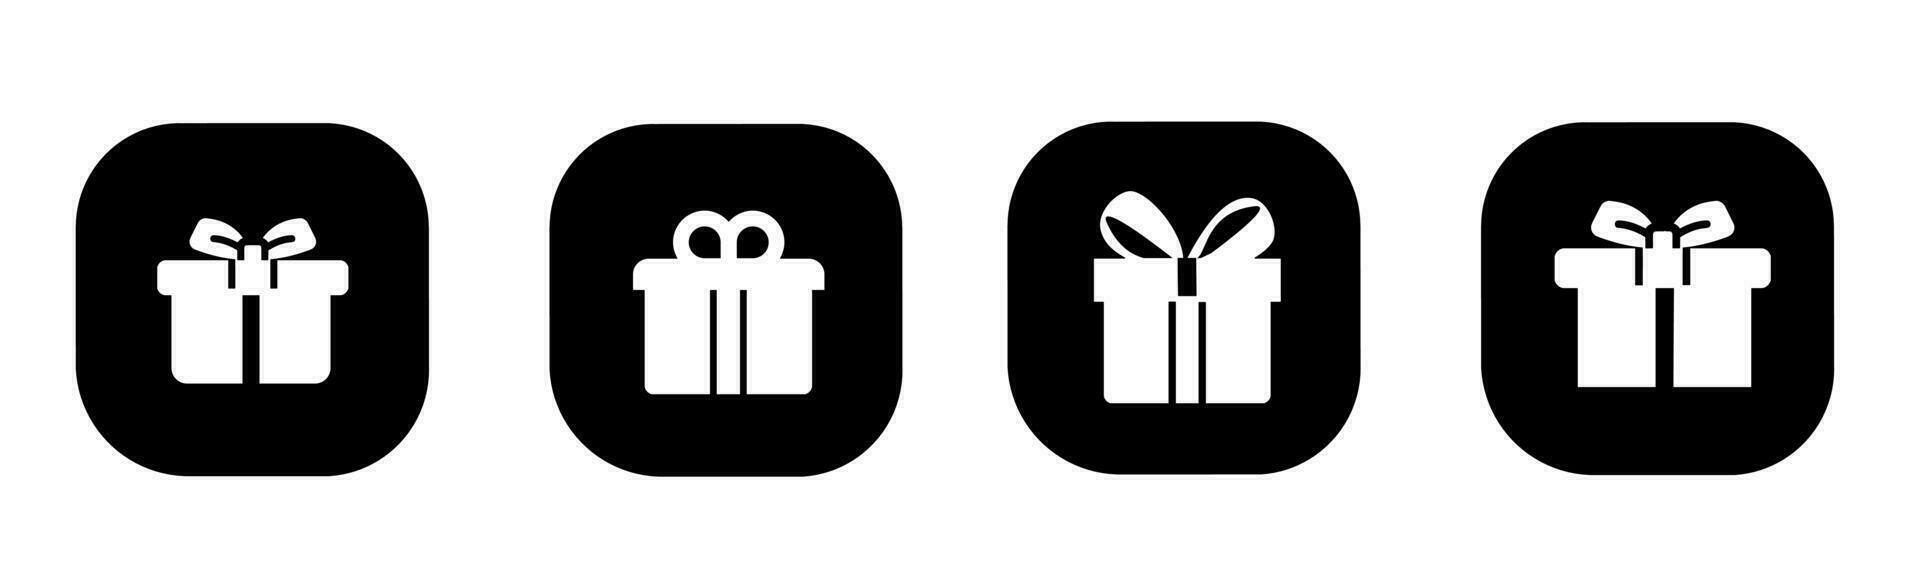 Gift box icon in flat. A gift box icon design. Stock vector. vector